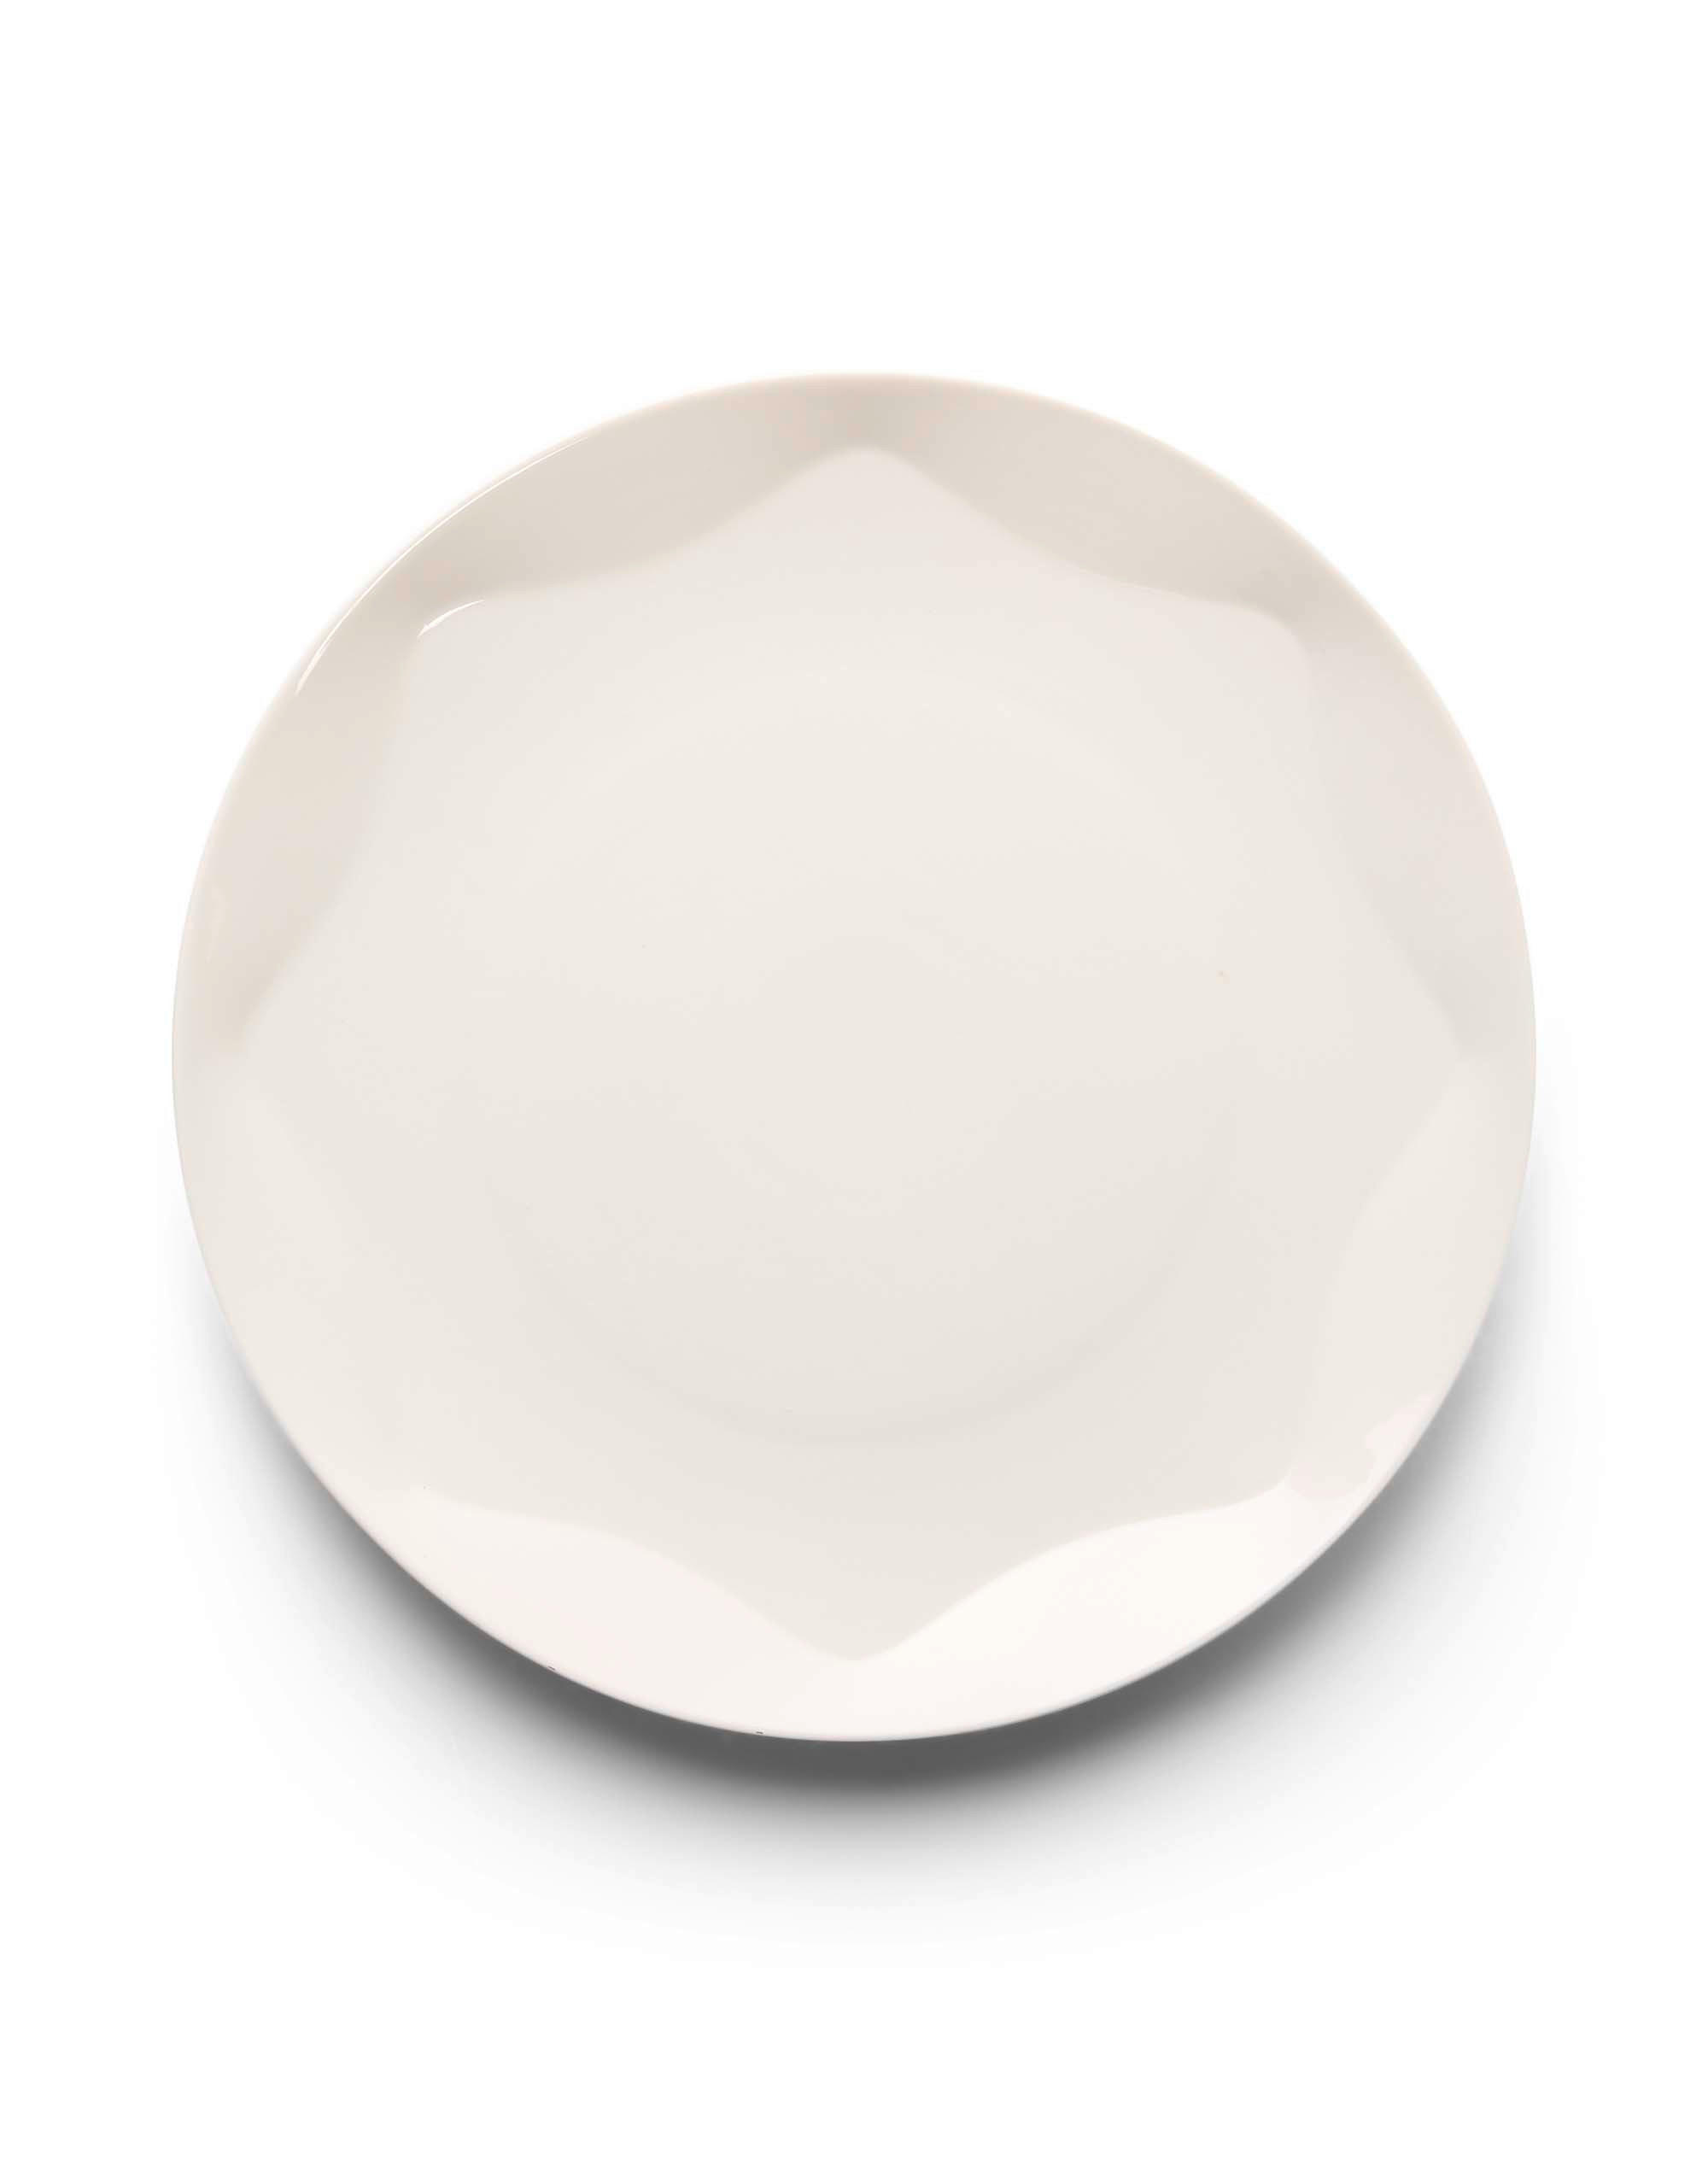 Essenza MĚLKÝ TALÍŘ, keramika, 27 cm - bílá